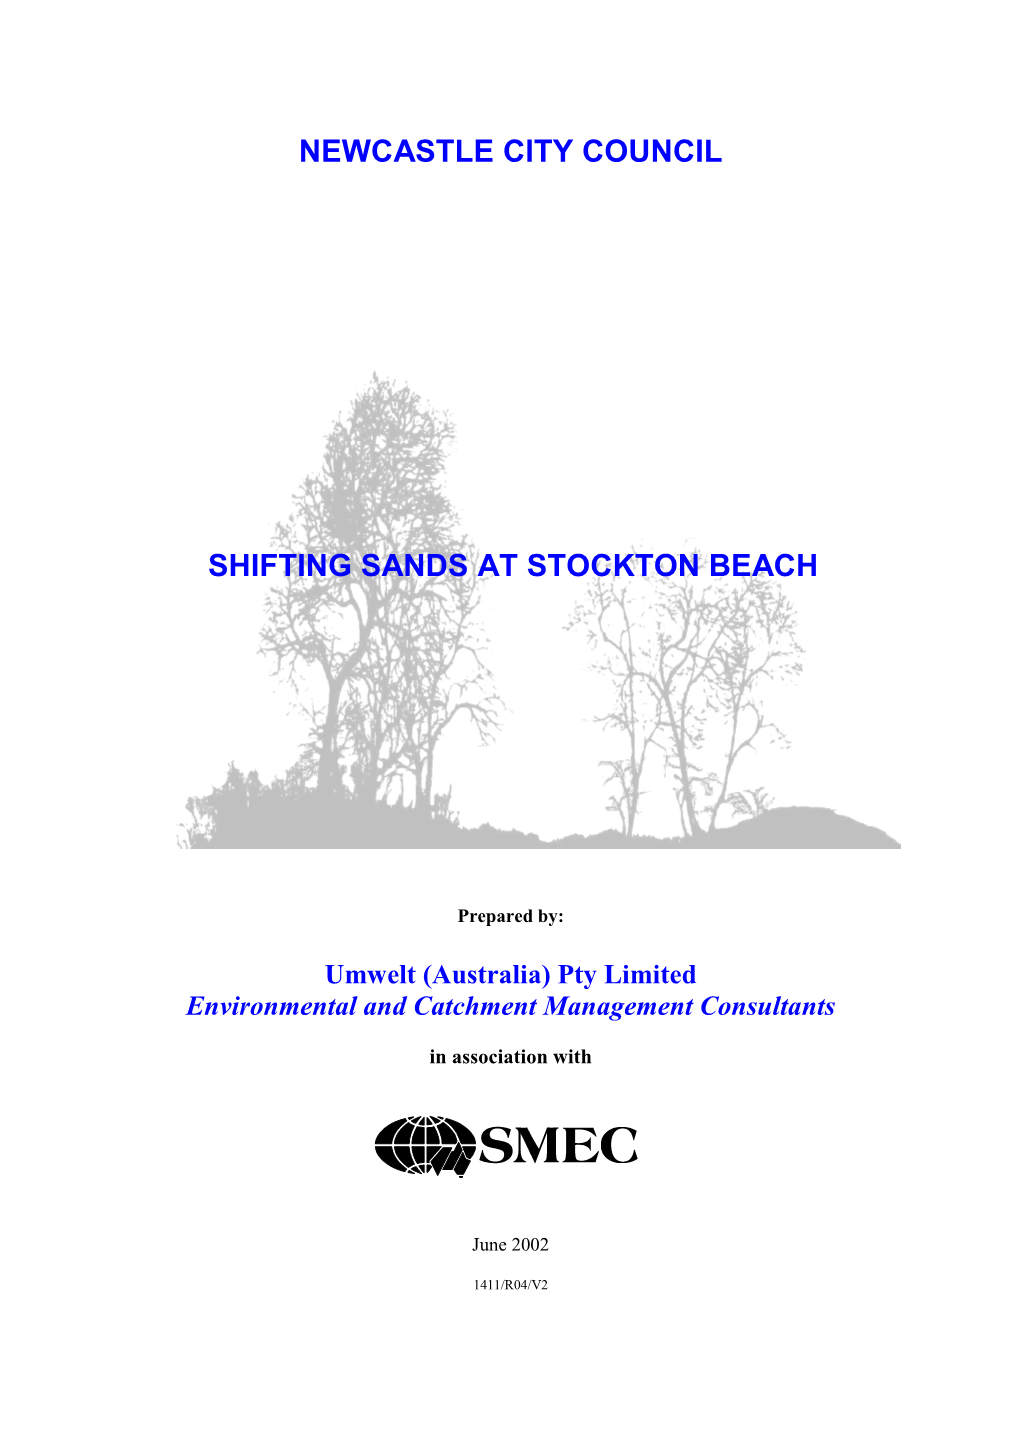 Shifting Sands at Stockton Beach Report